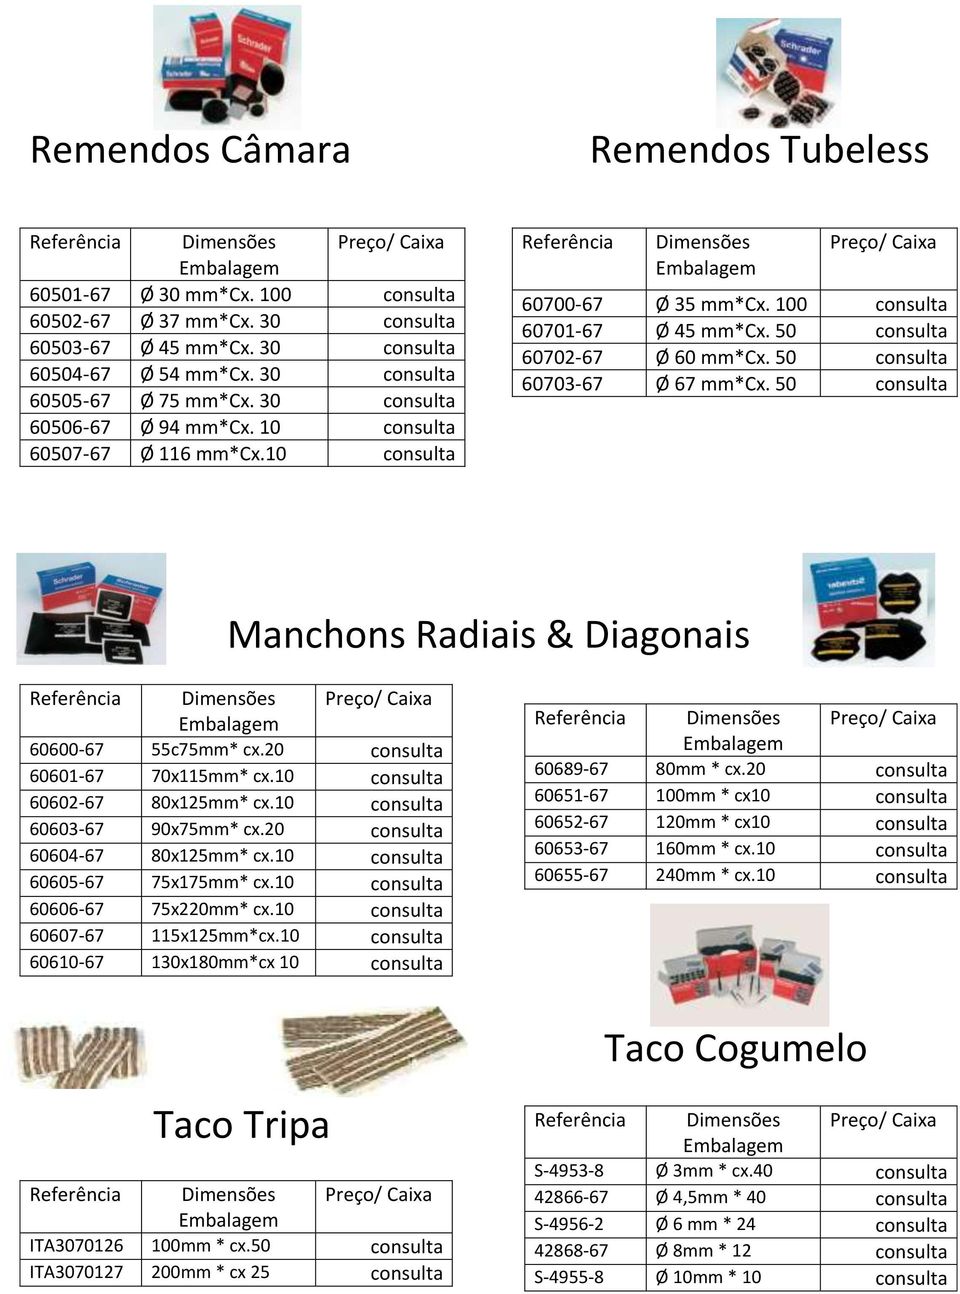 50 Manchons Radiais & Diagonais Referência Dimensões Preço/ Caixa Embalagem 60600-67 55c75mm* cx.20 60601-67 70x115mm* cx.10 60602-67 80x125mm* cx.10 60603-67 90x75mm* cx.20 60604-67 80x125mm* cx.